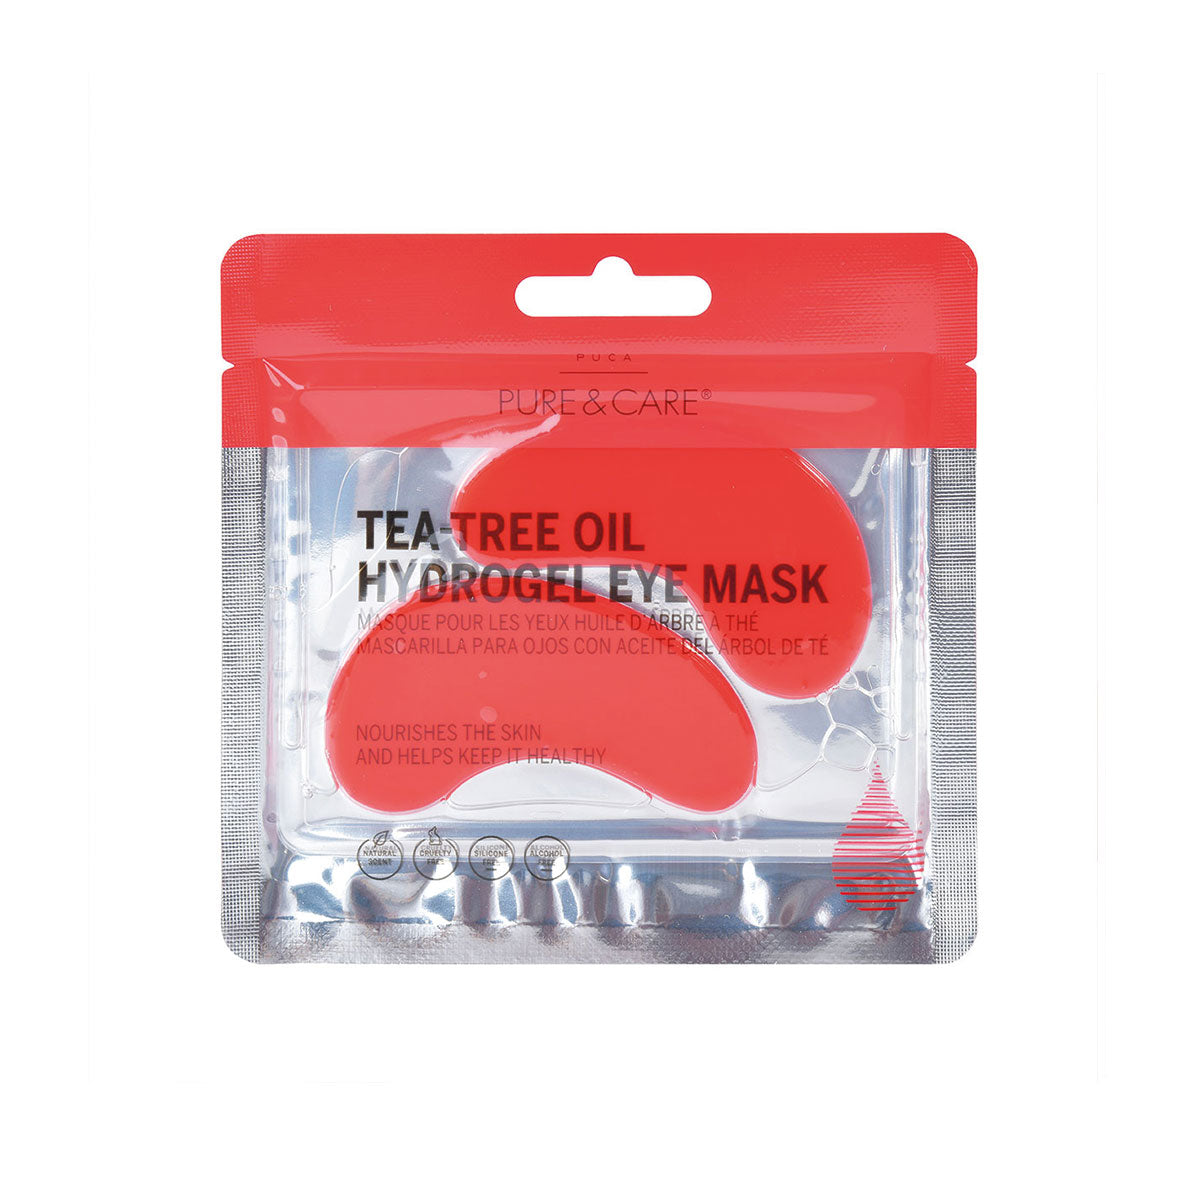 Hydrogel Eye Mask Tea Tree Oil| PUCA - PURE & CARE